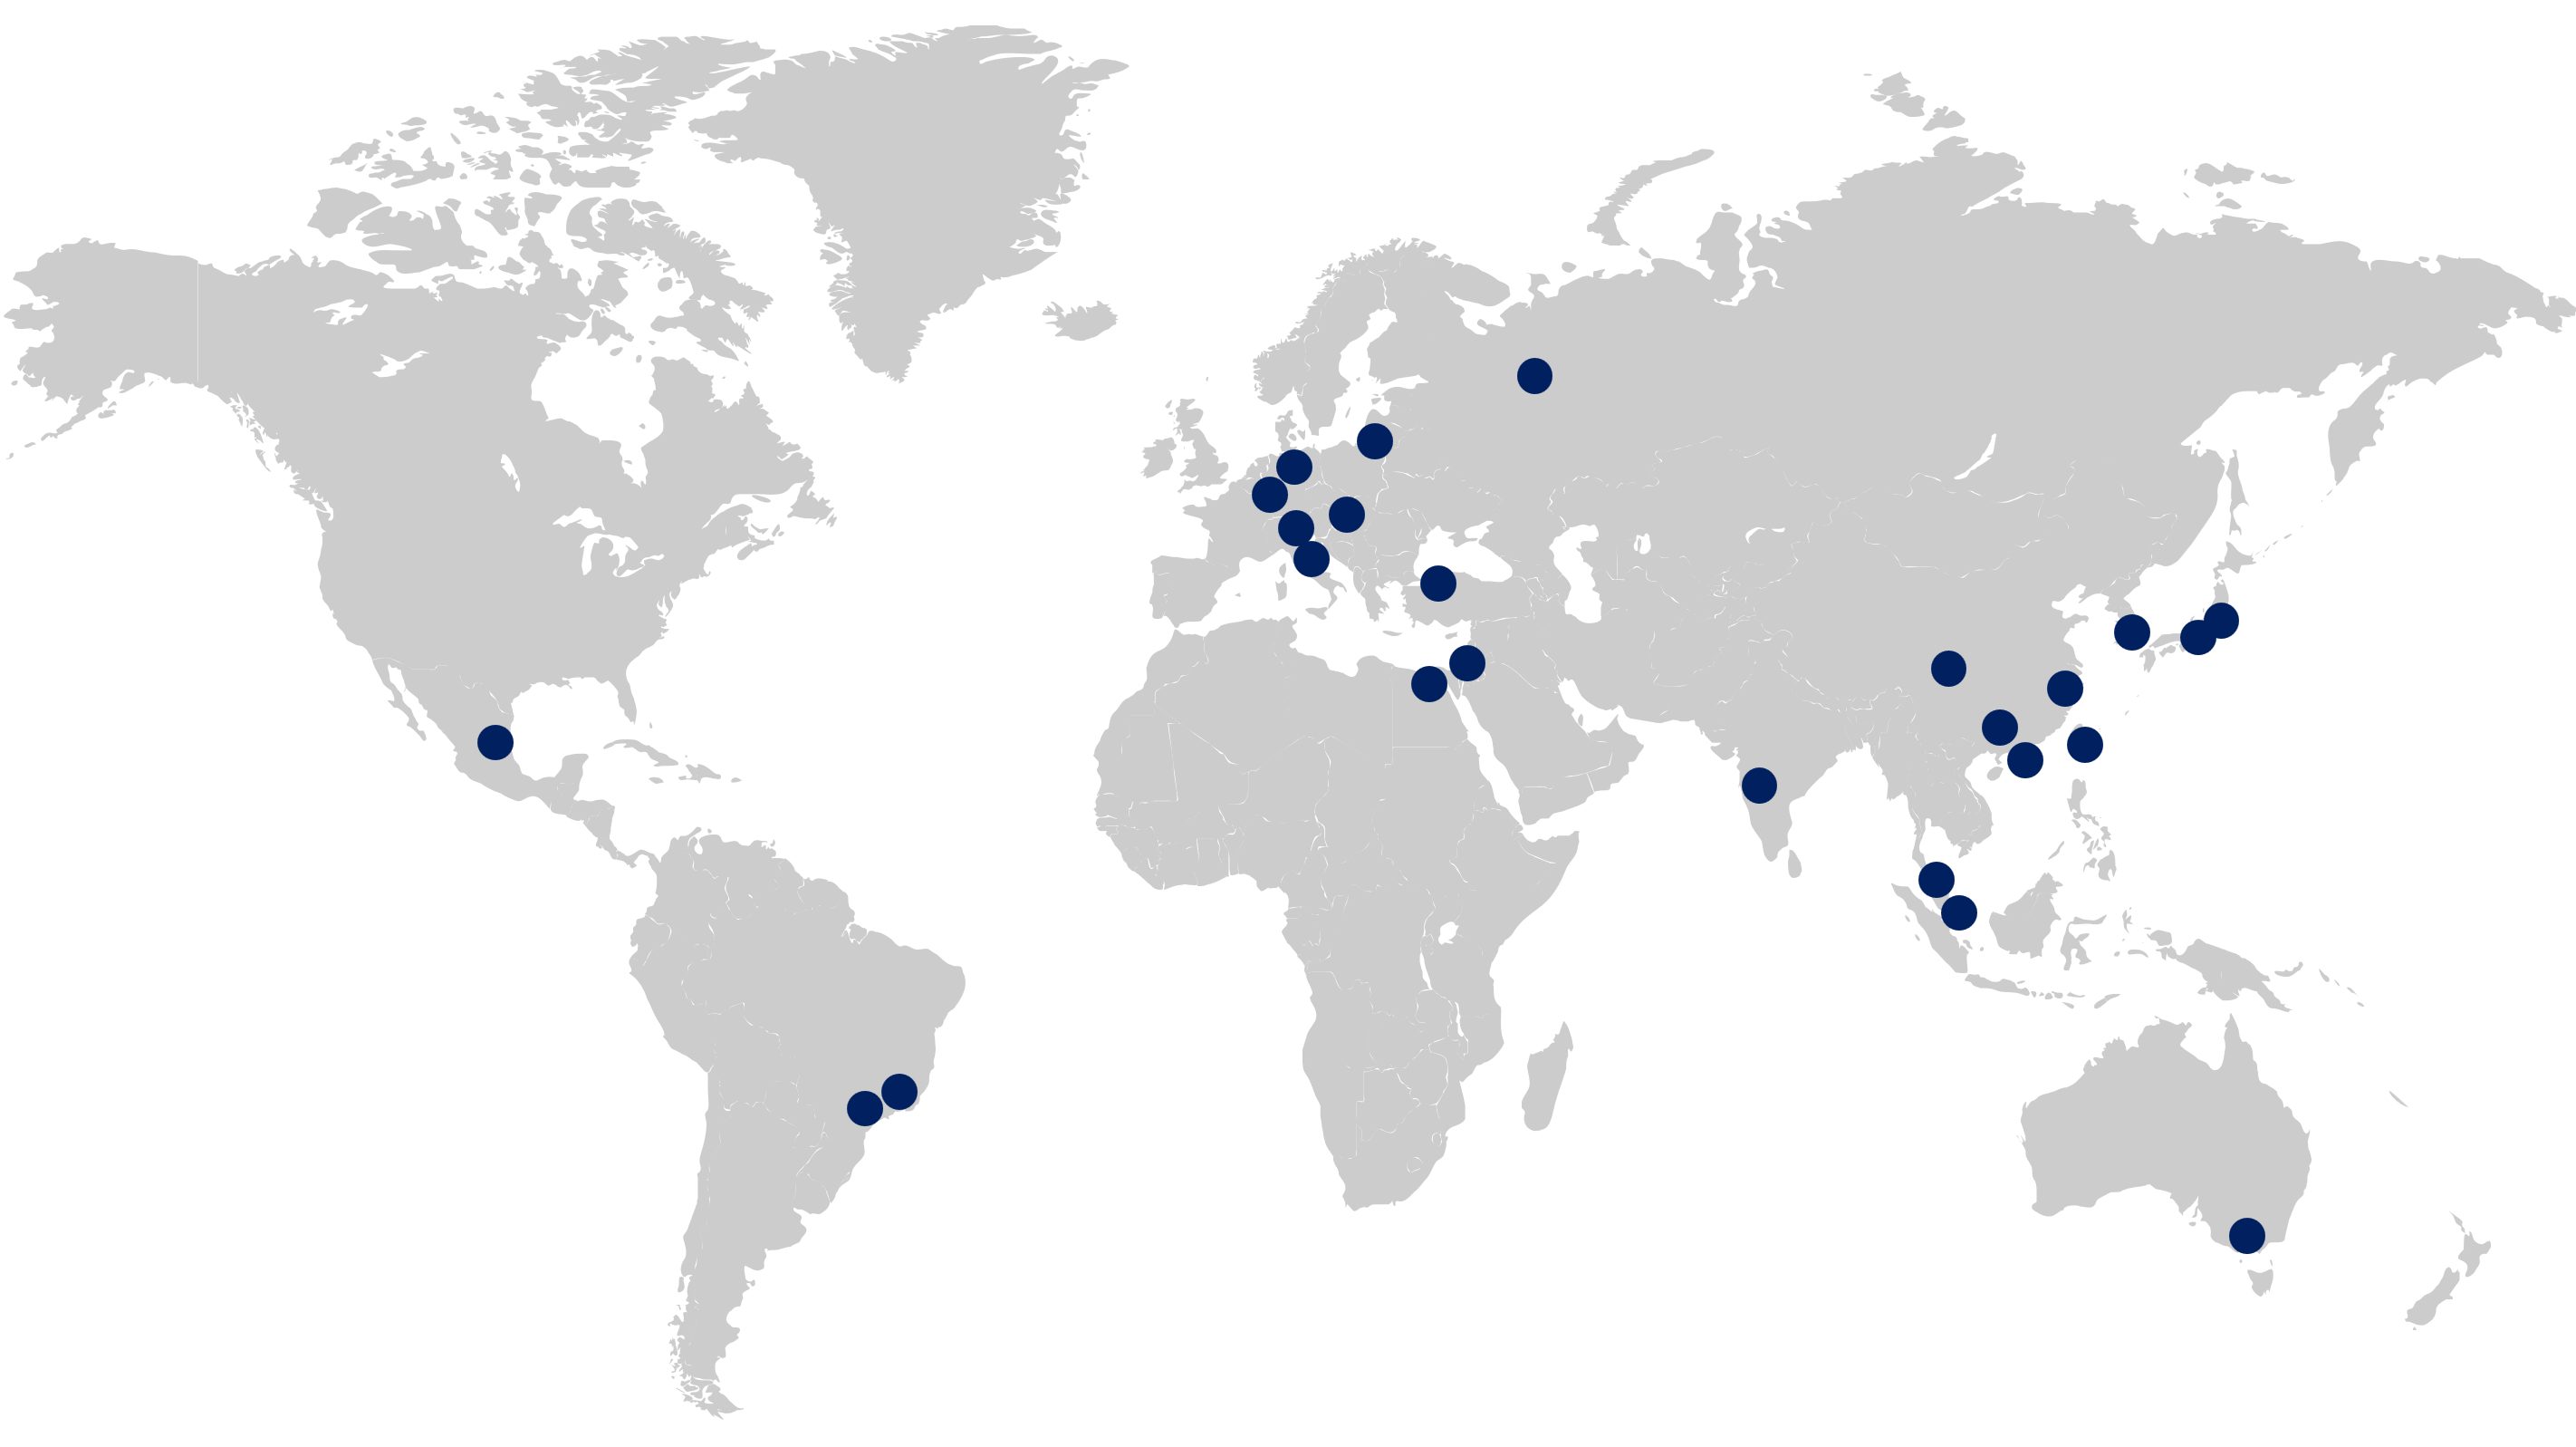 Map showing 25 Dialogue locations: Monterey, Sao Paulo, Hamburg, Frankfurt, Milan, Vienna, Vilnius, Istanbul, Cairo, Holon, Moscow, Mumbai, Chengdu, Kuala Lumpur, Singapore, Shenzhen, Hong Kong, Taipei, Rio de Janeiro, Shanghai, Seoul, Tokyo, Melbourne.